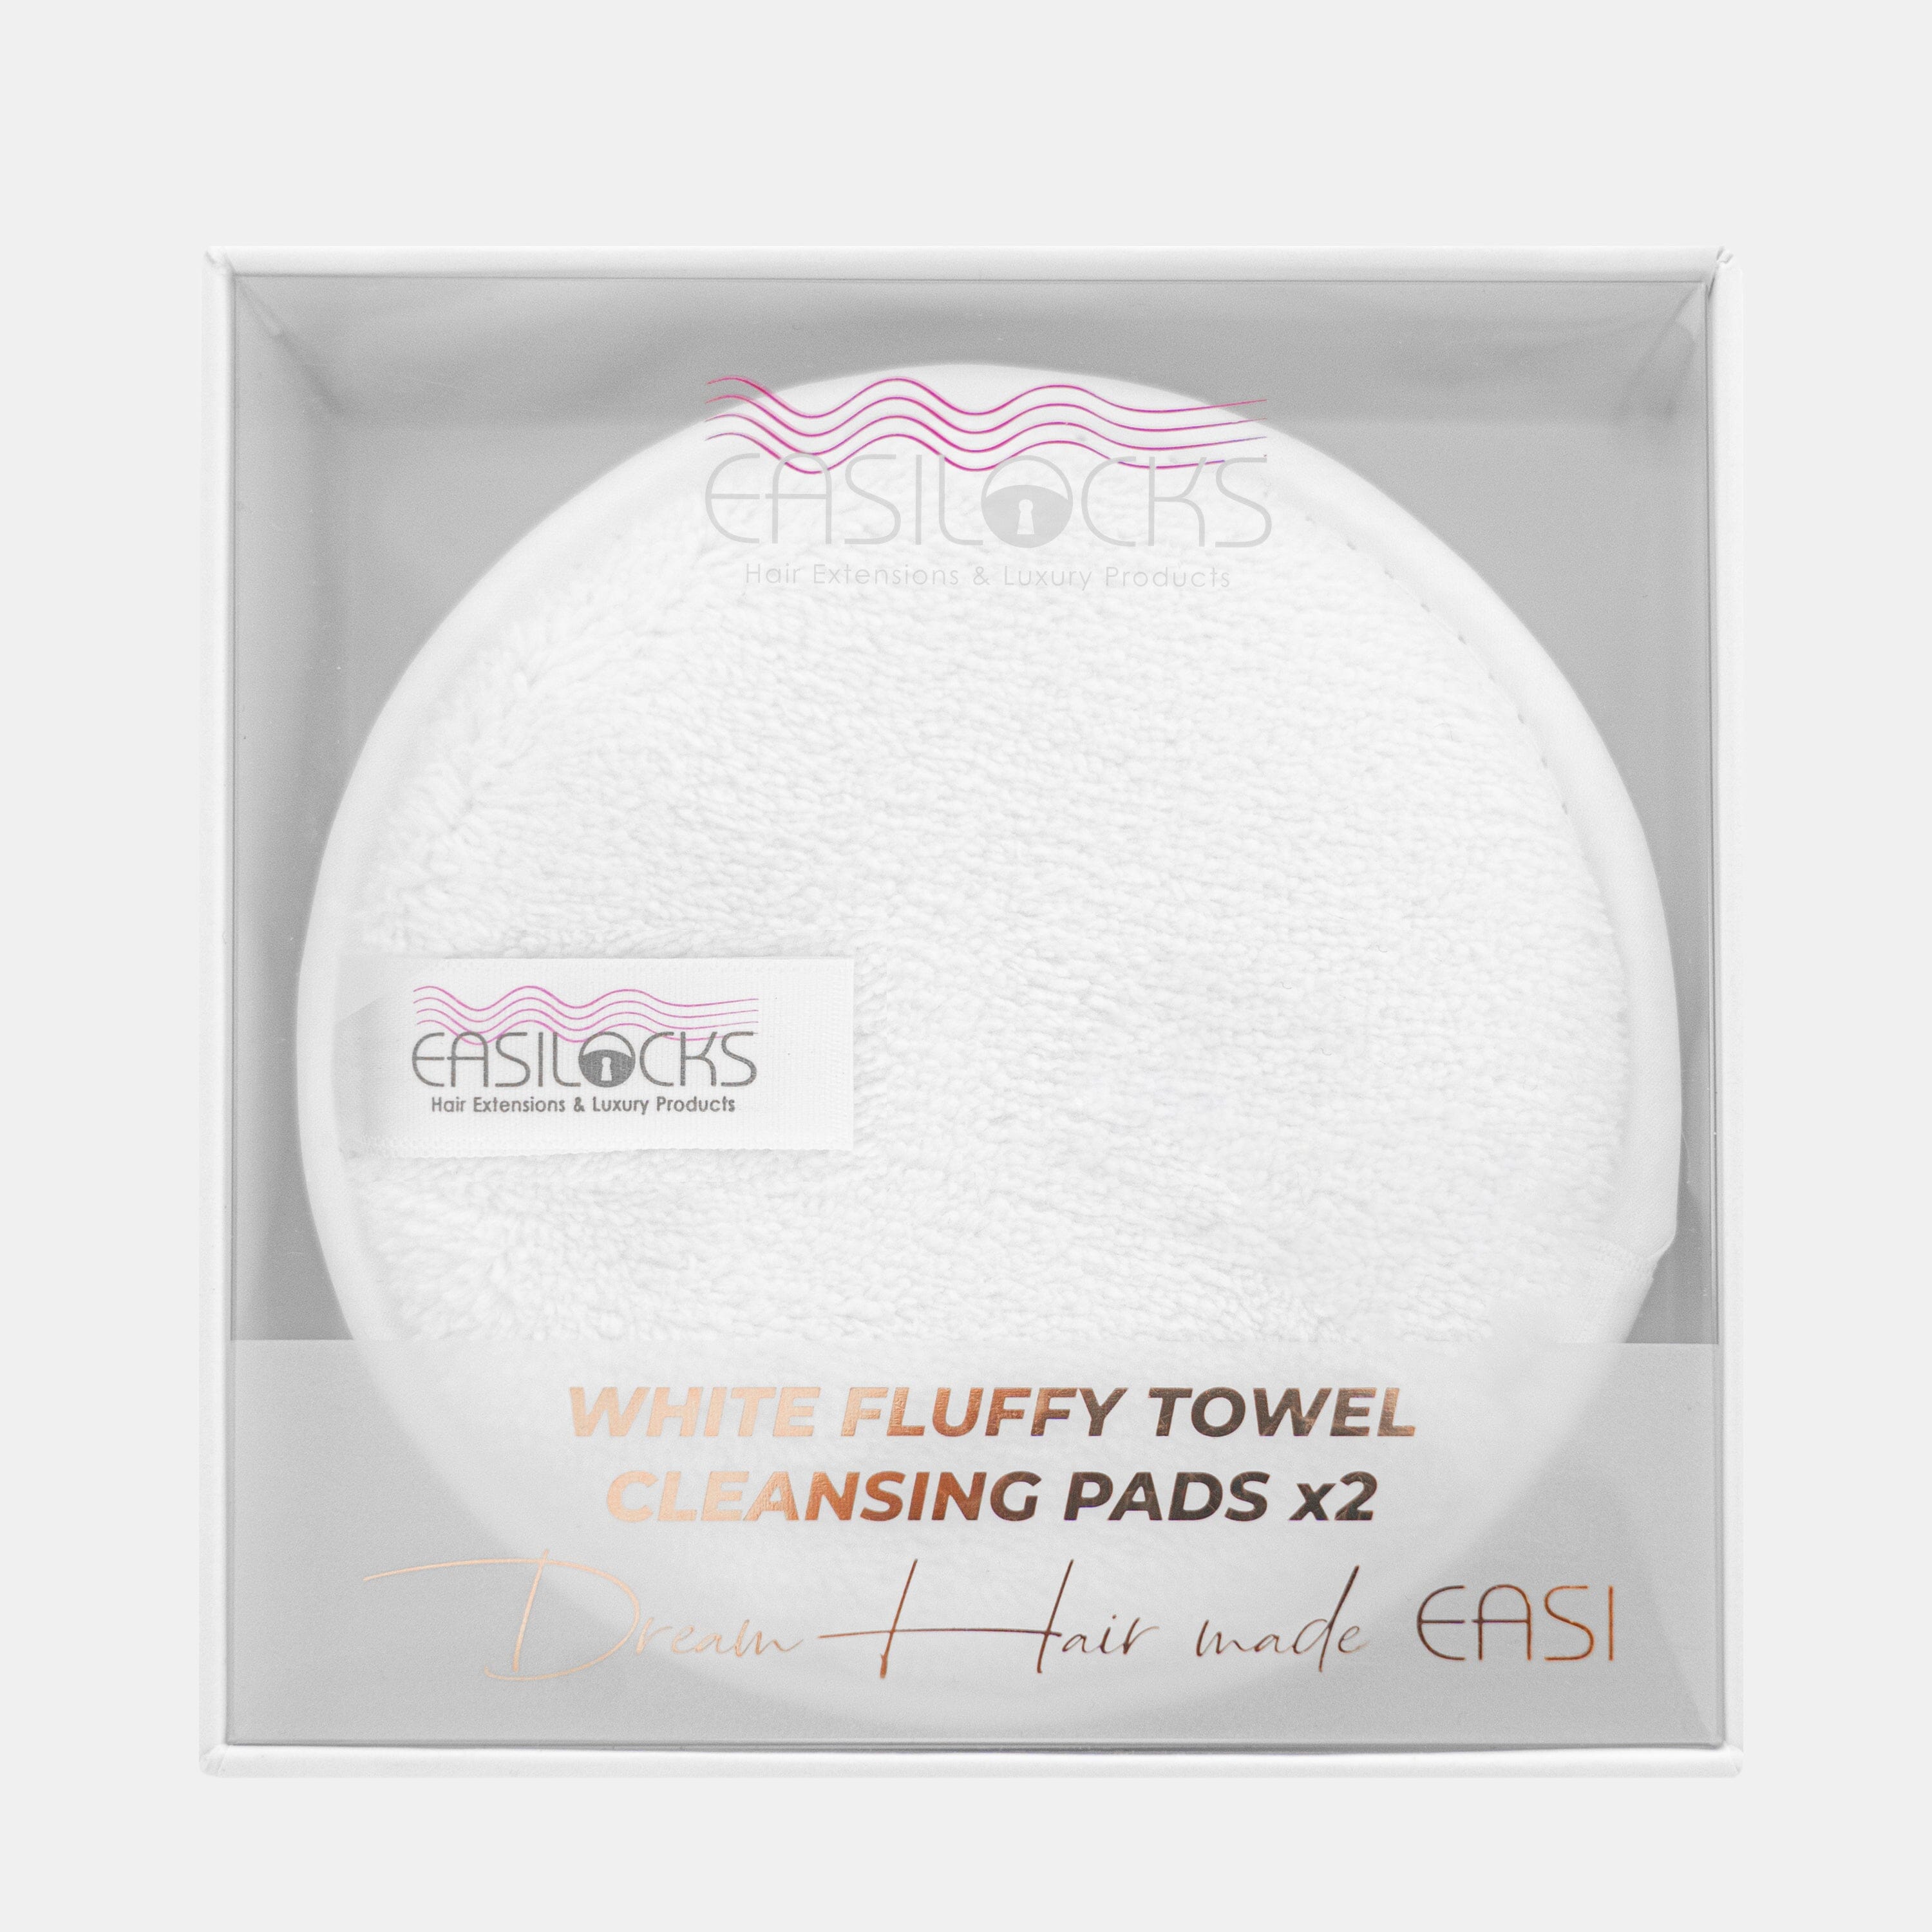 Easilocks Fluffy Towel Cleansing Pads (7426388459715)